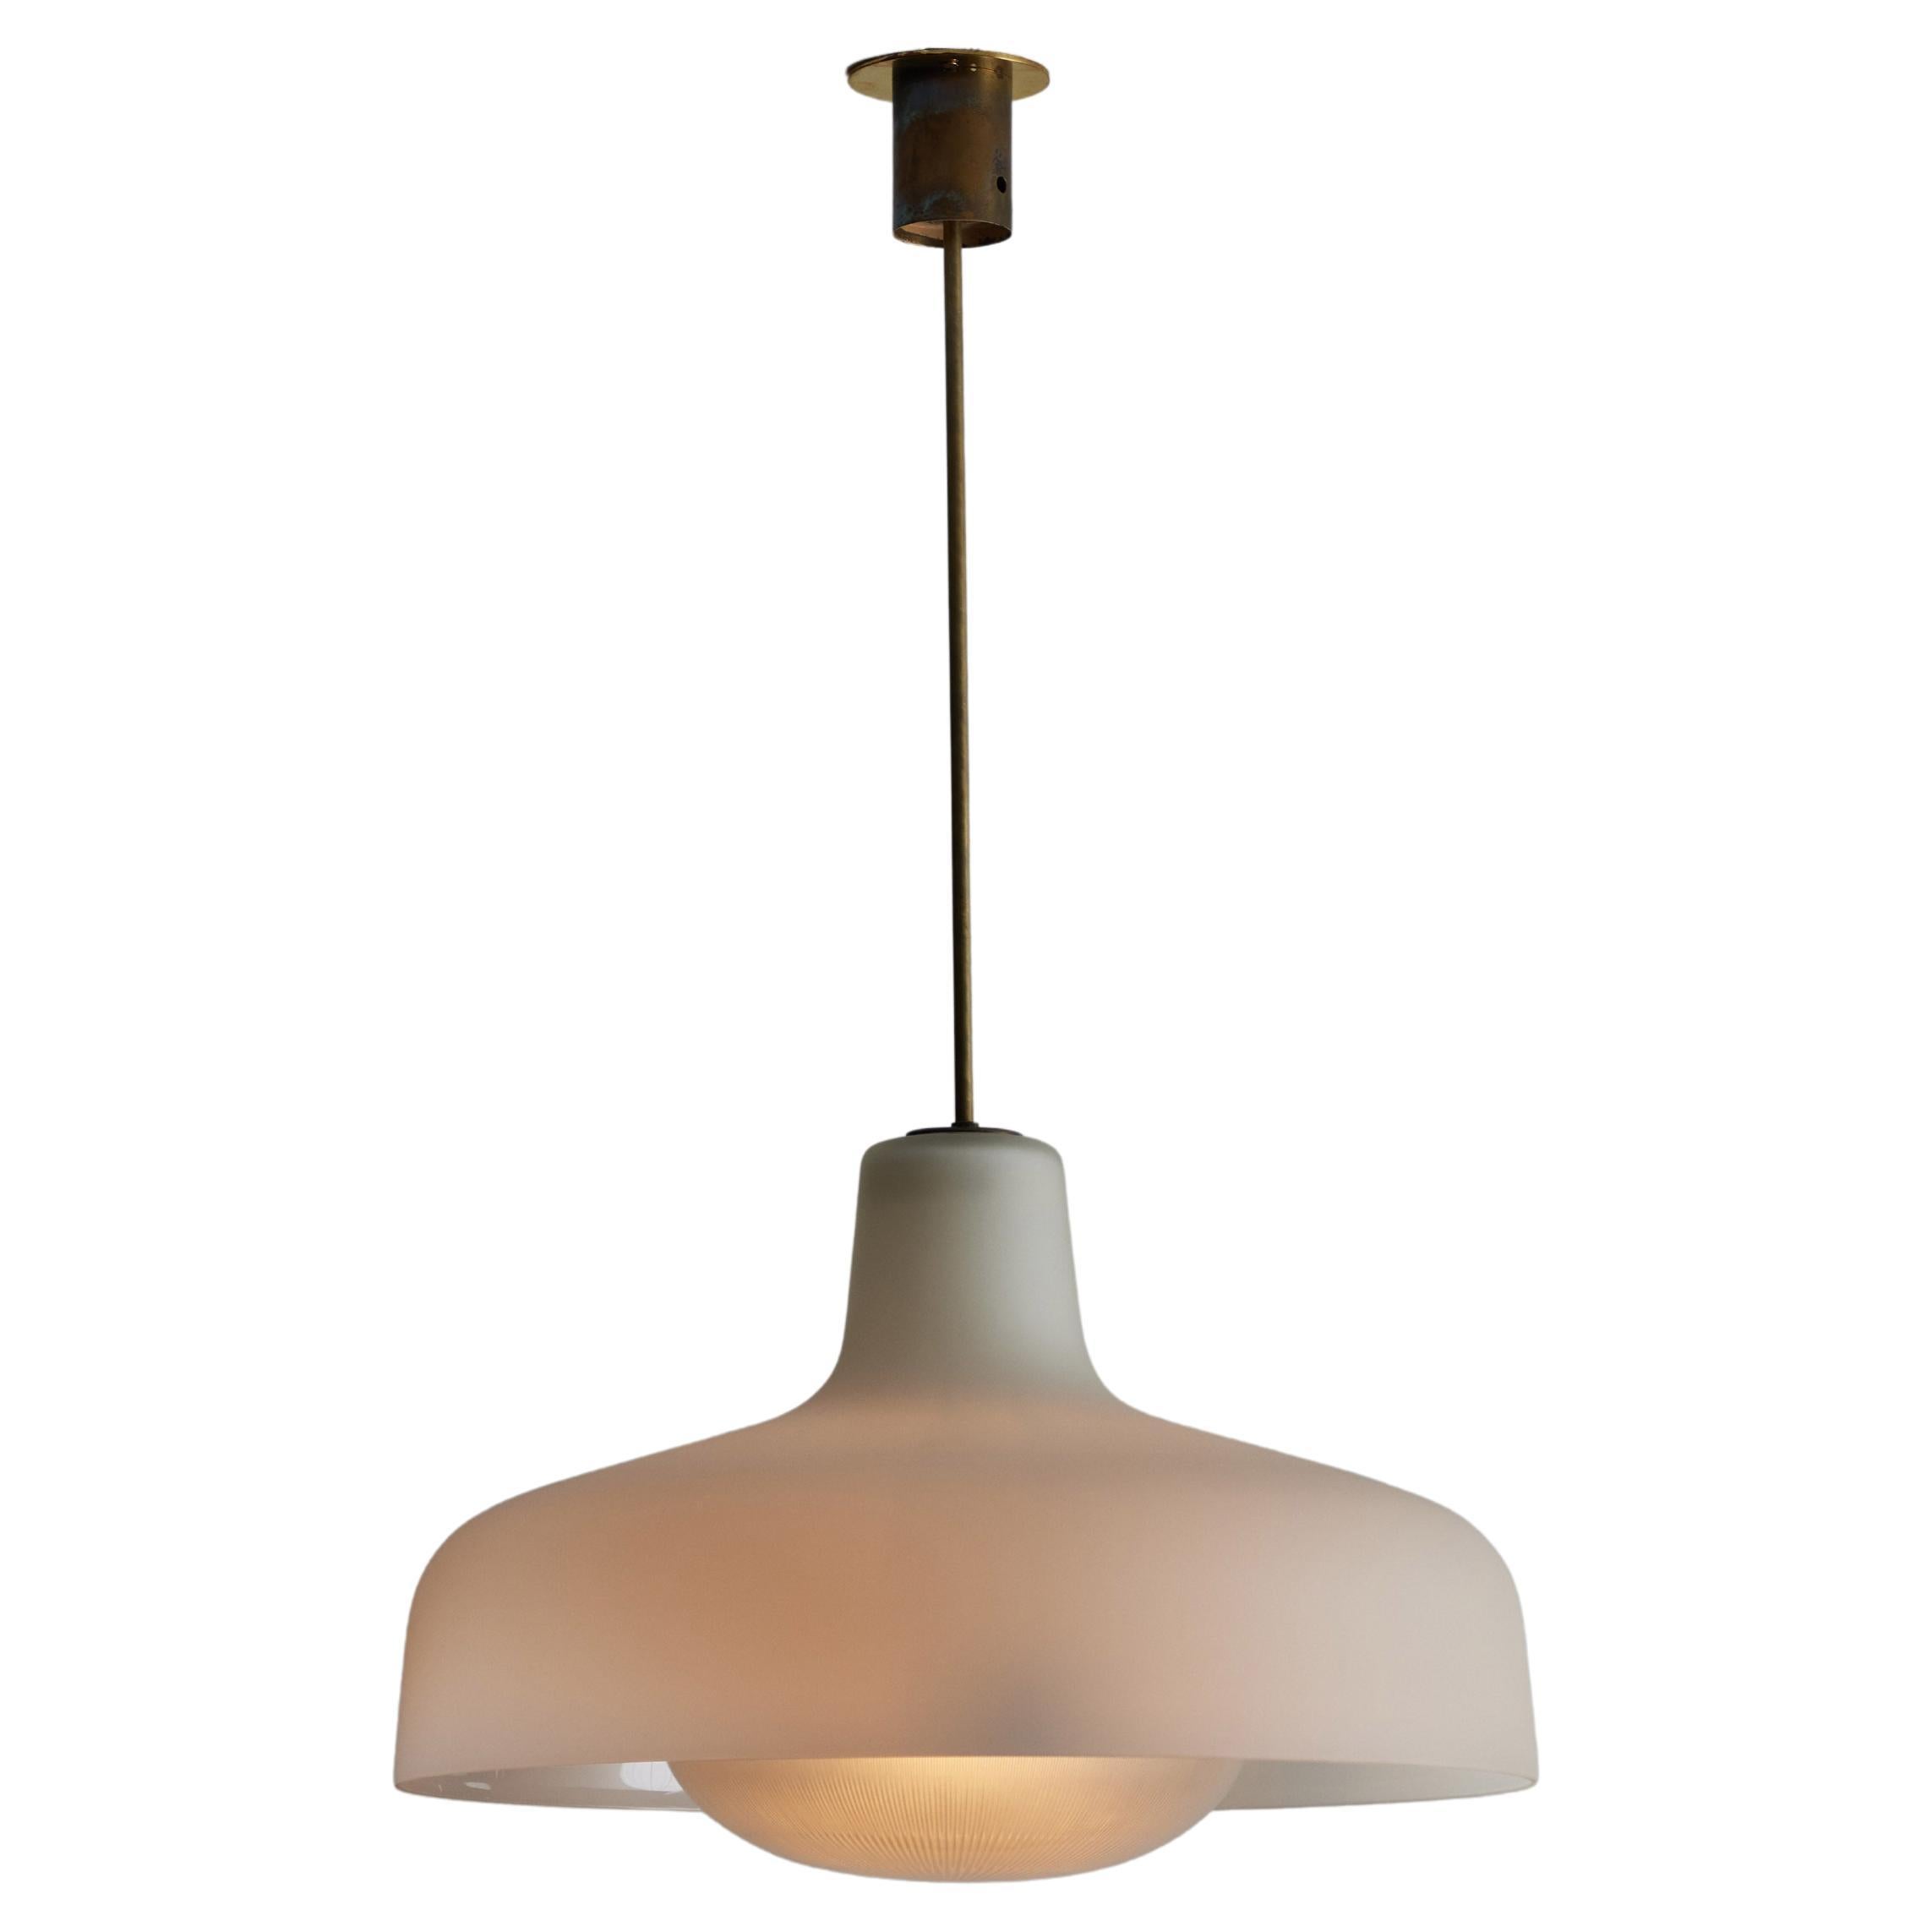 Model LS7 “Paolina��” Ceiling Light by Ignazio Gardella for Azucena